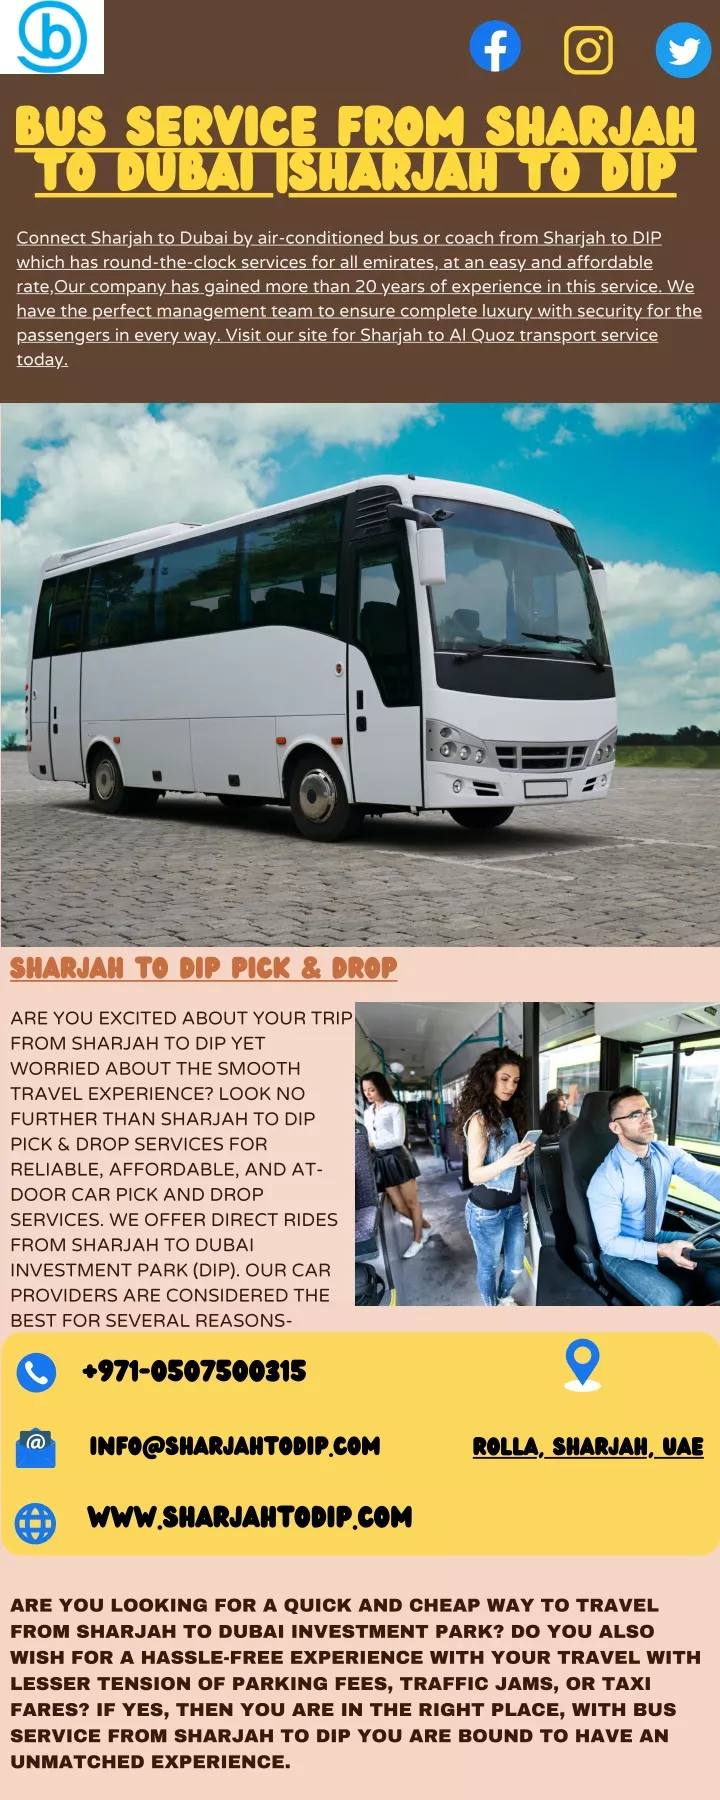 bus service from sharjah to dubai sharjah to dip